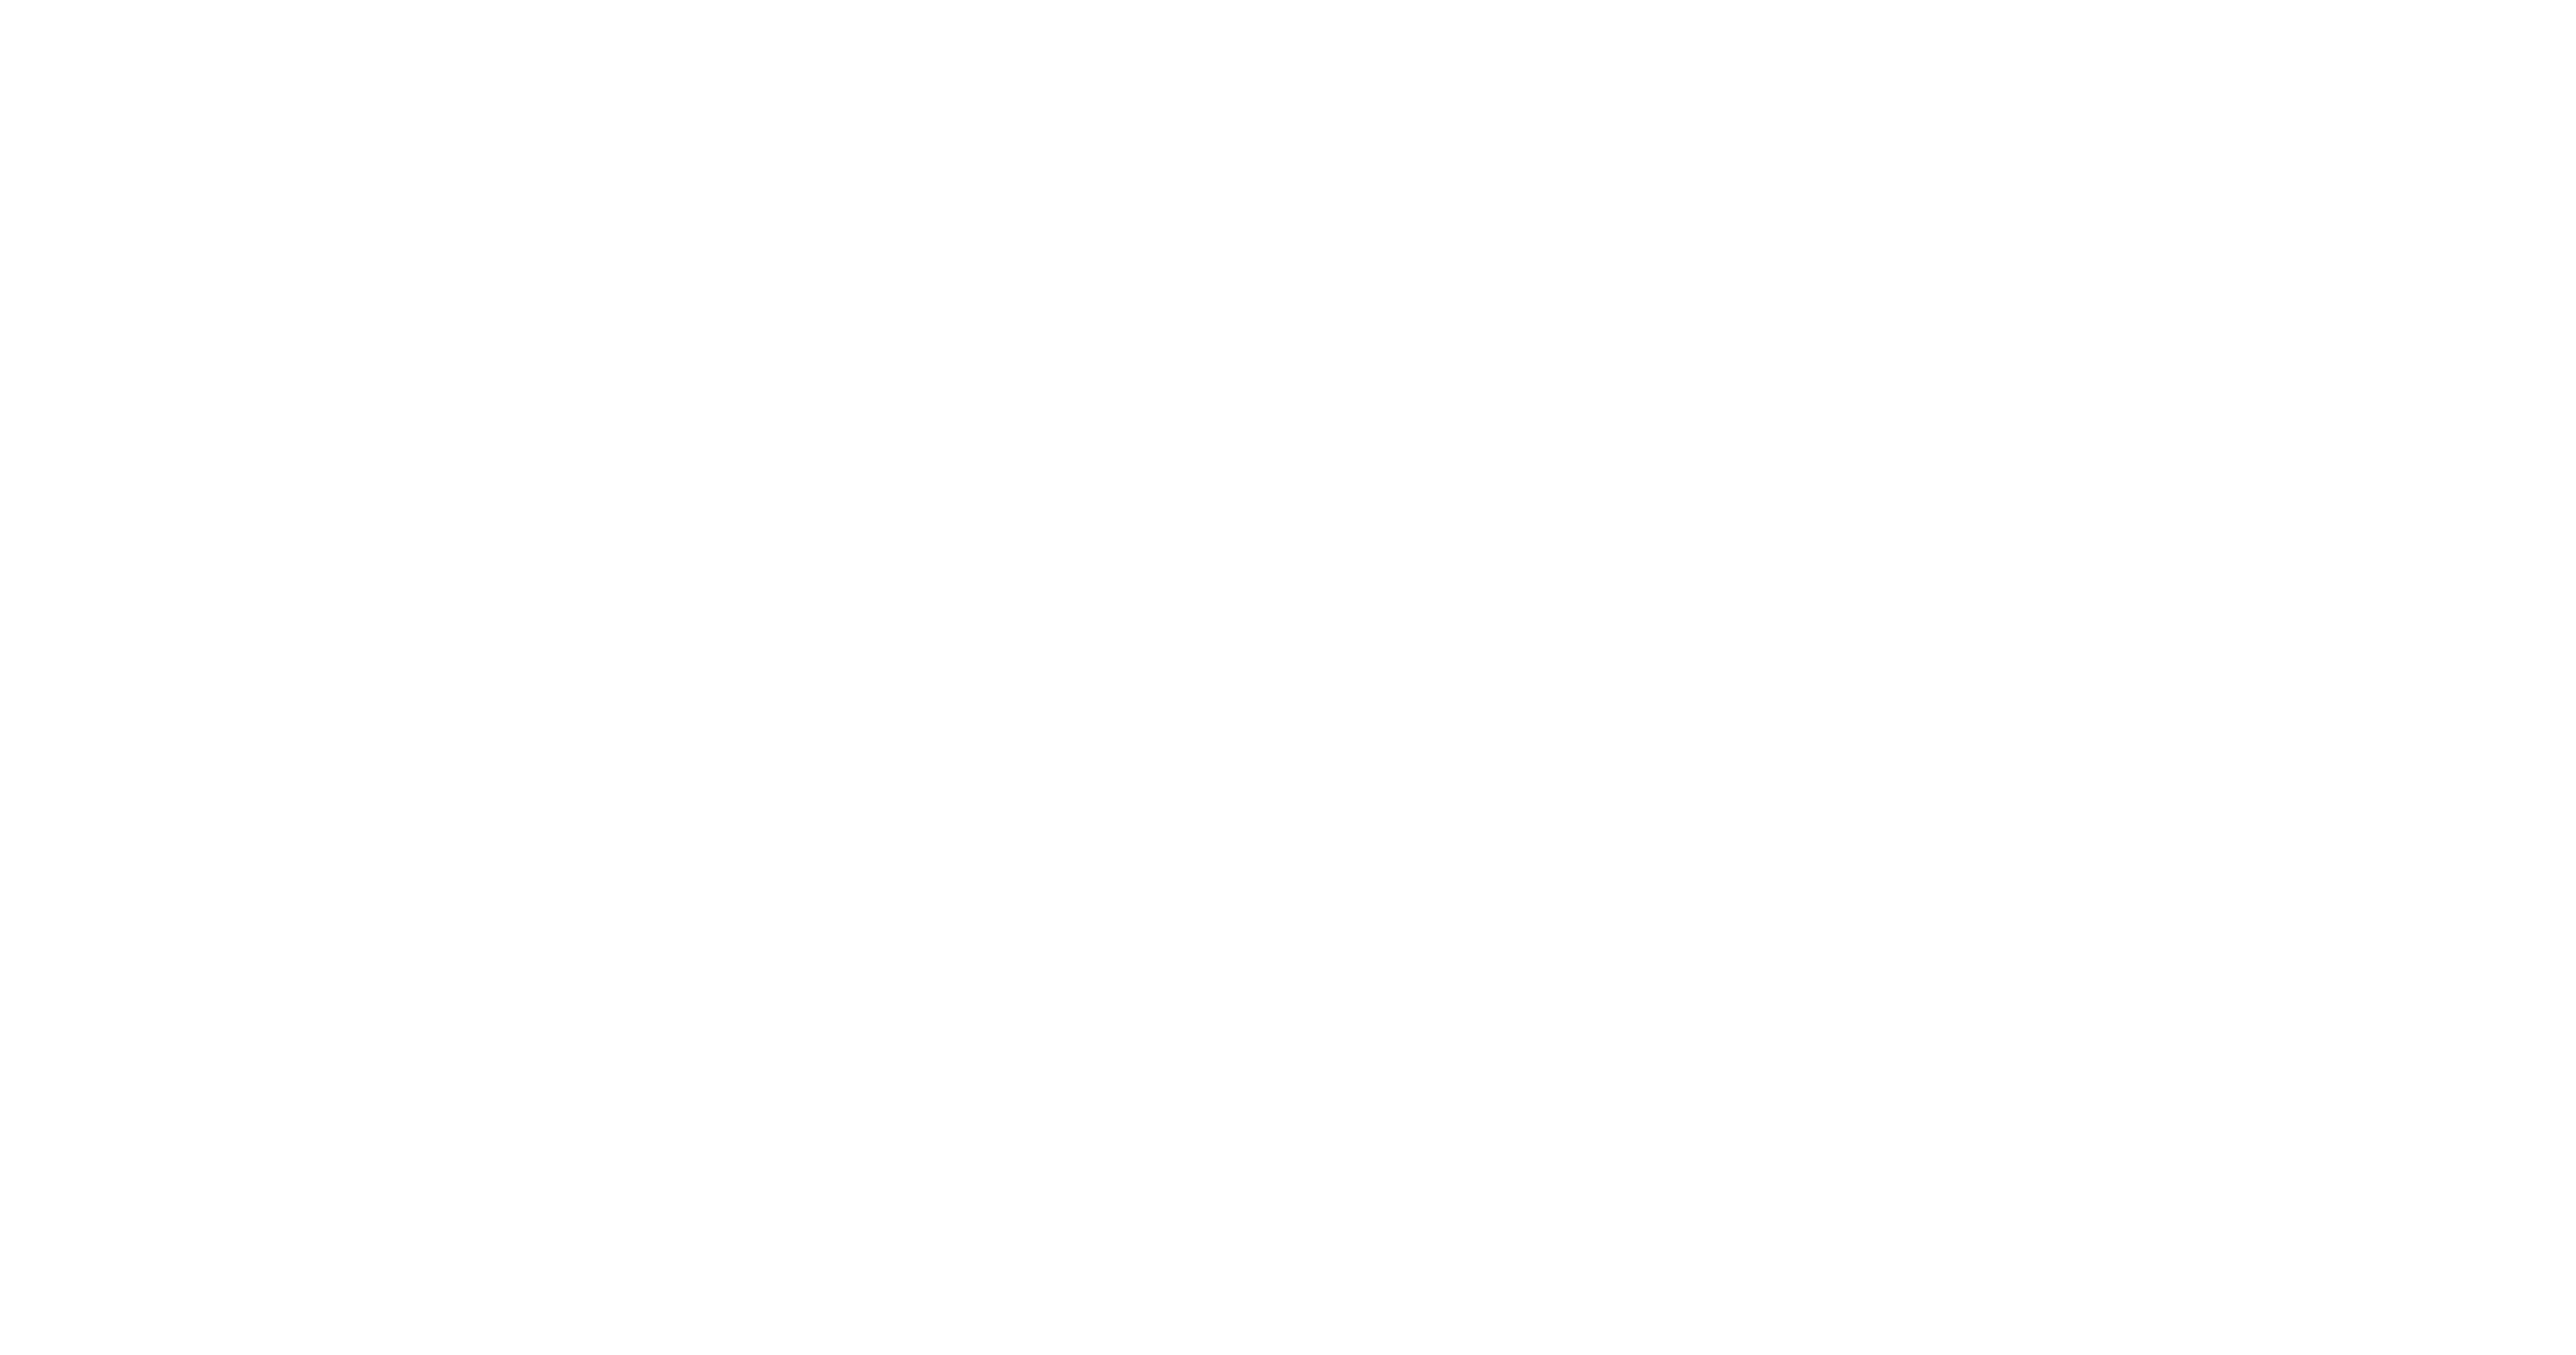 Feel good production